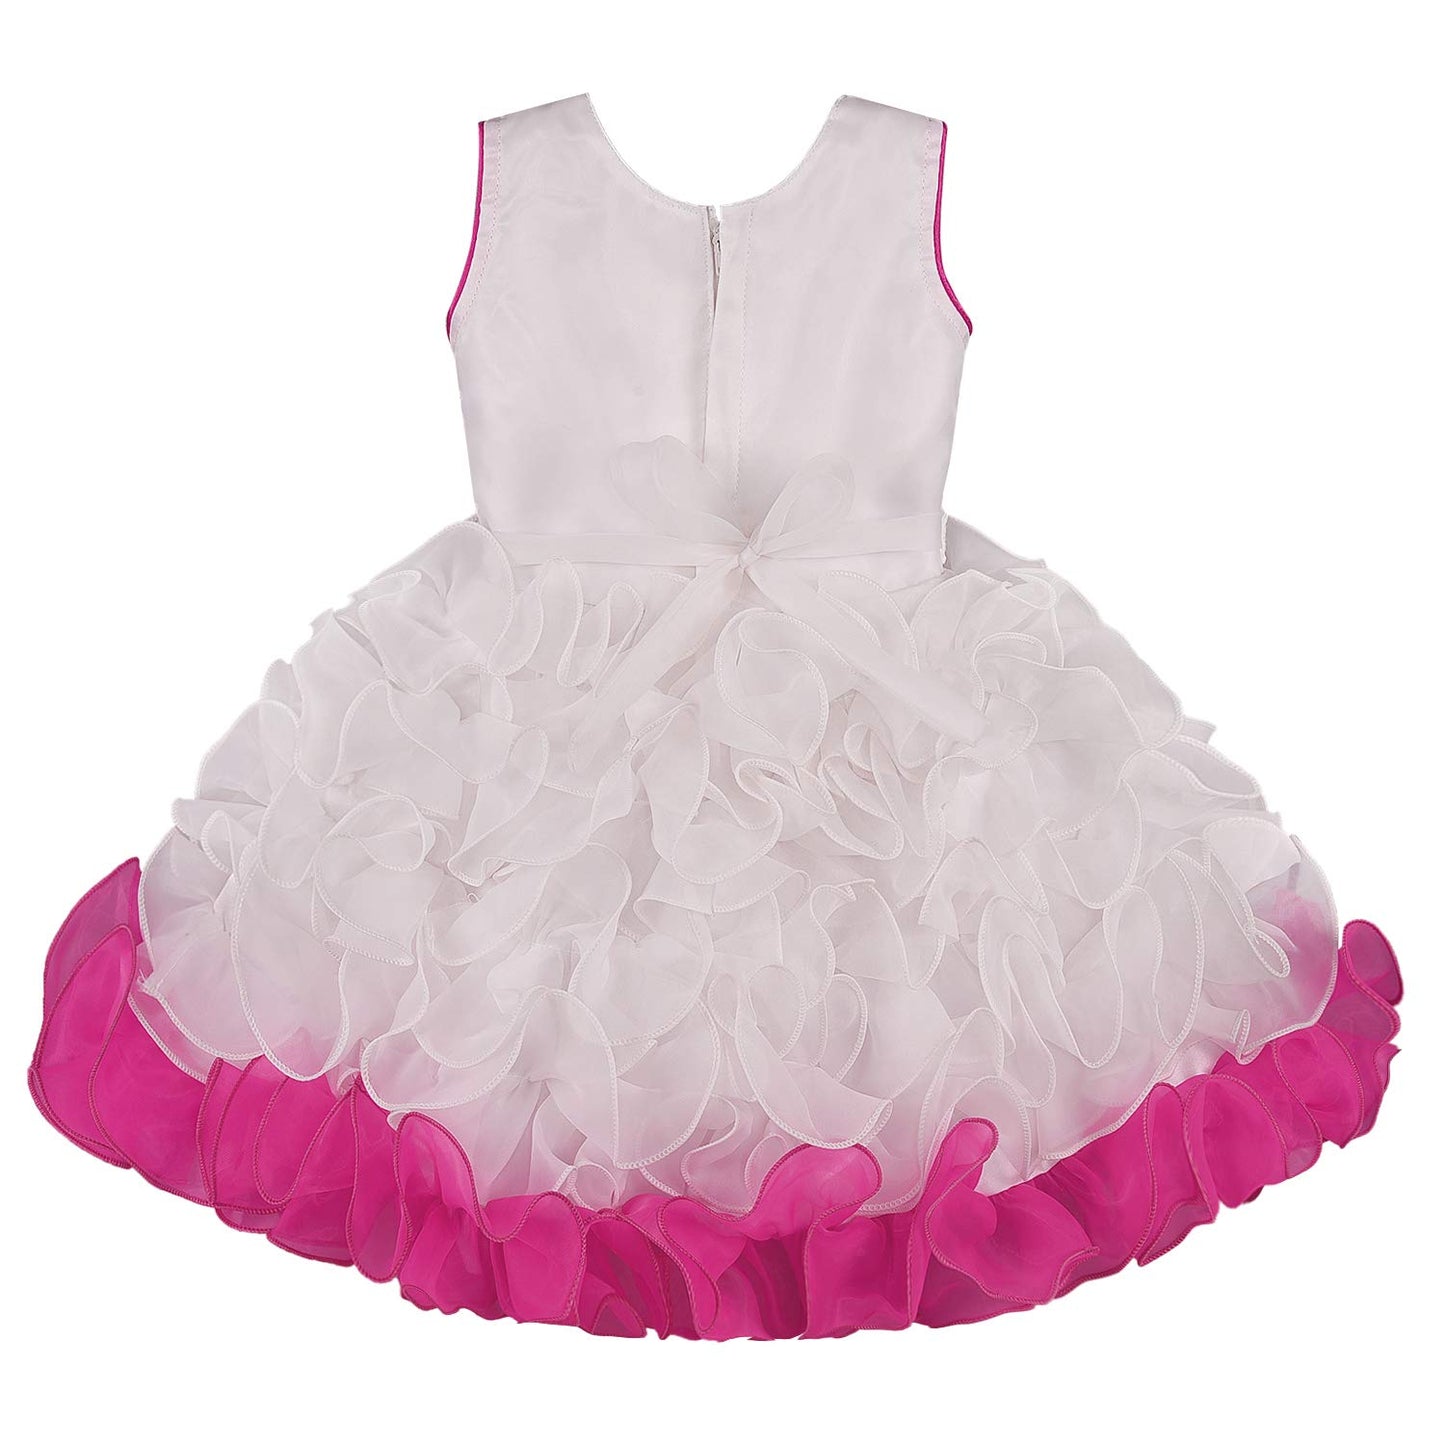 Baby Girls Party Wear Frock Birthday Dress For Girls bxa170dpnk - Wish Karo Party Wear - frocks Party Wear - baby dress